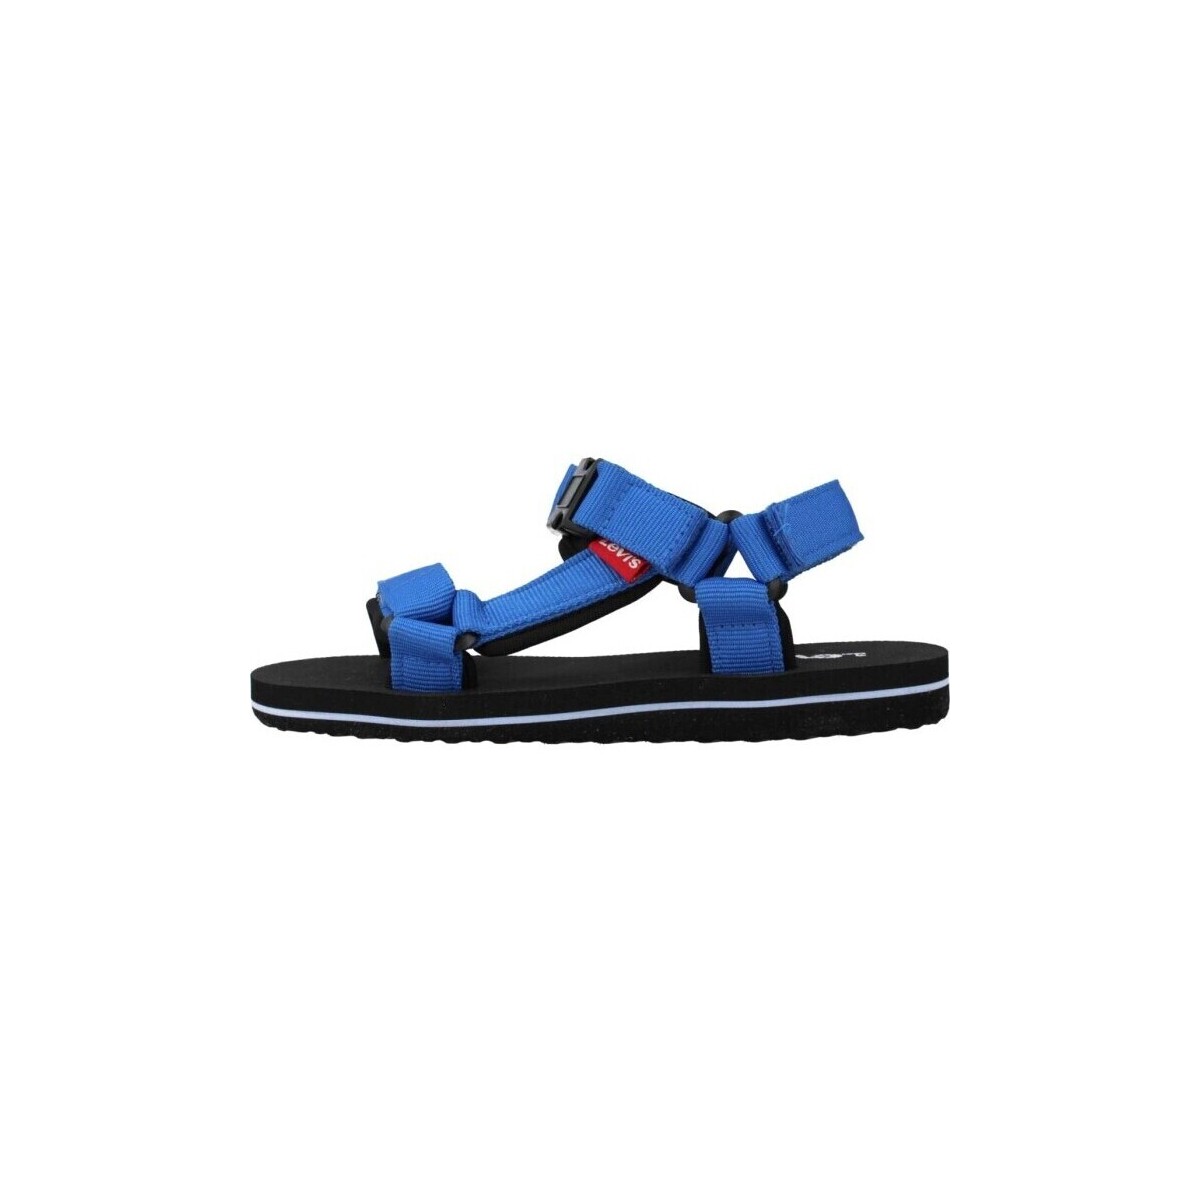 Schuhe Sandalen / Sandaletten Levi's 27470-20 Blau